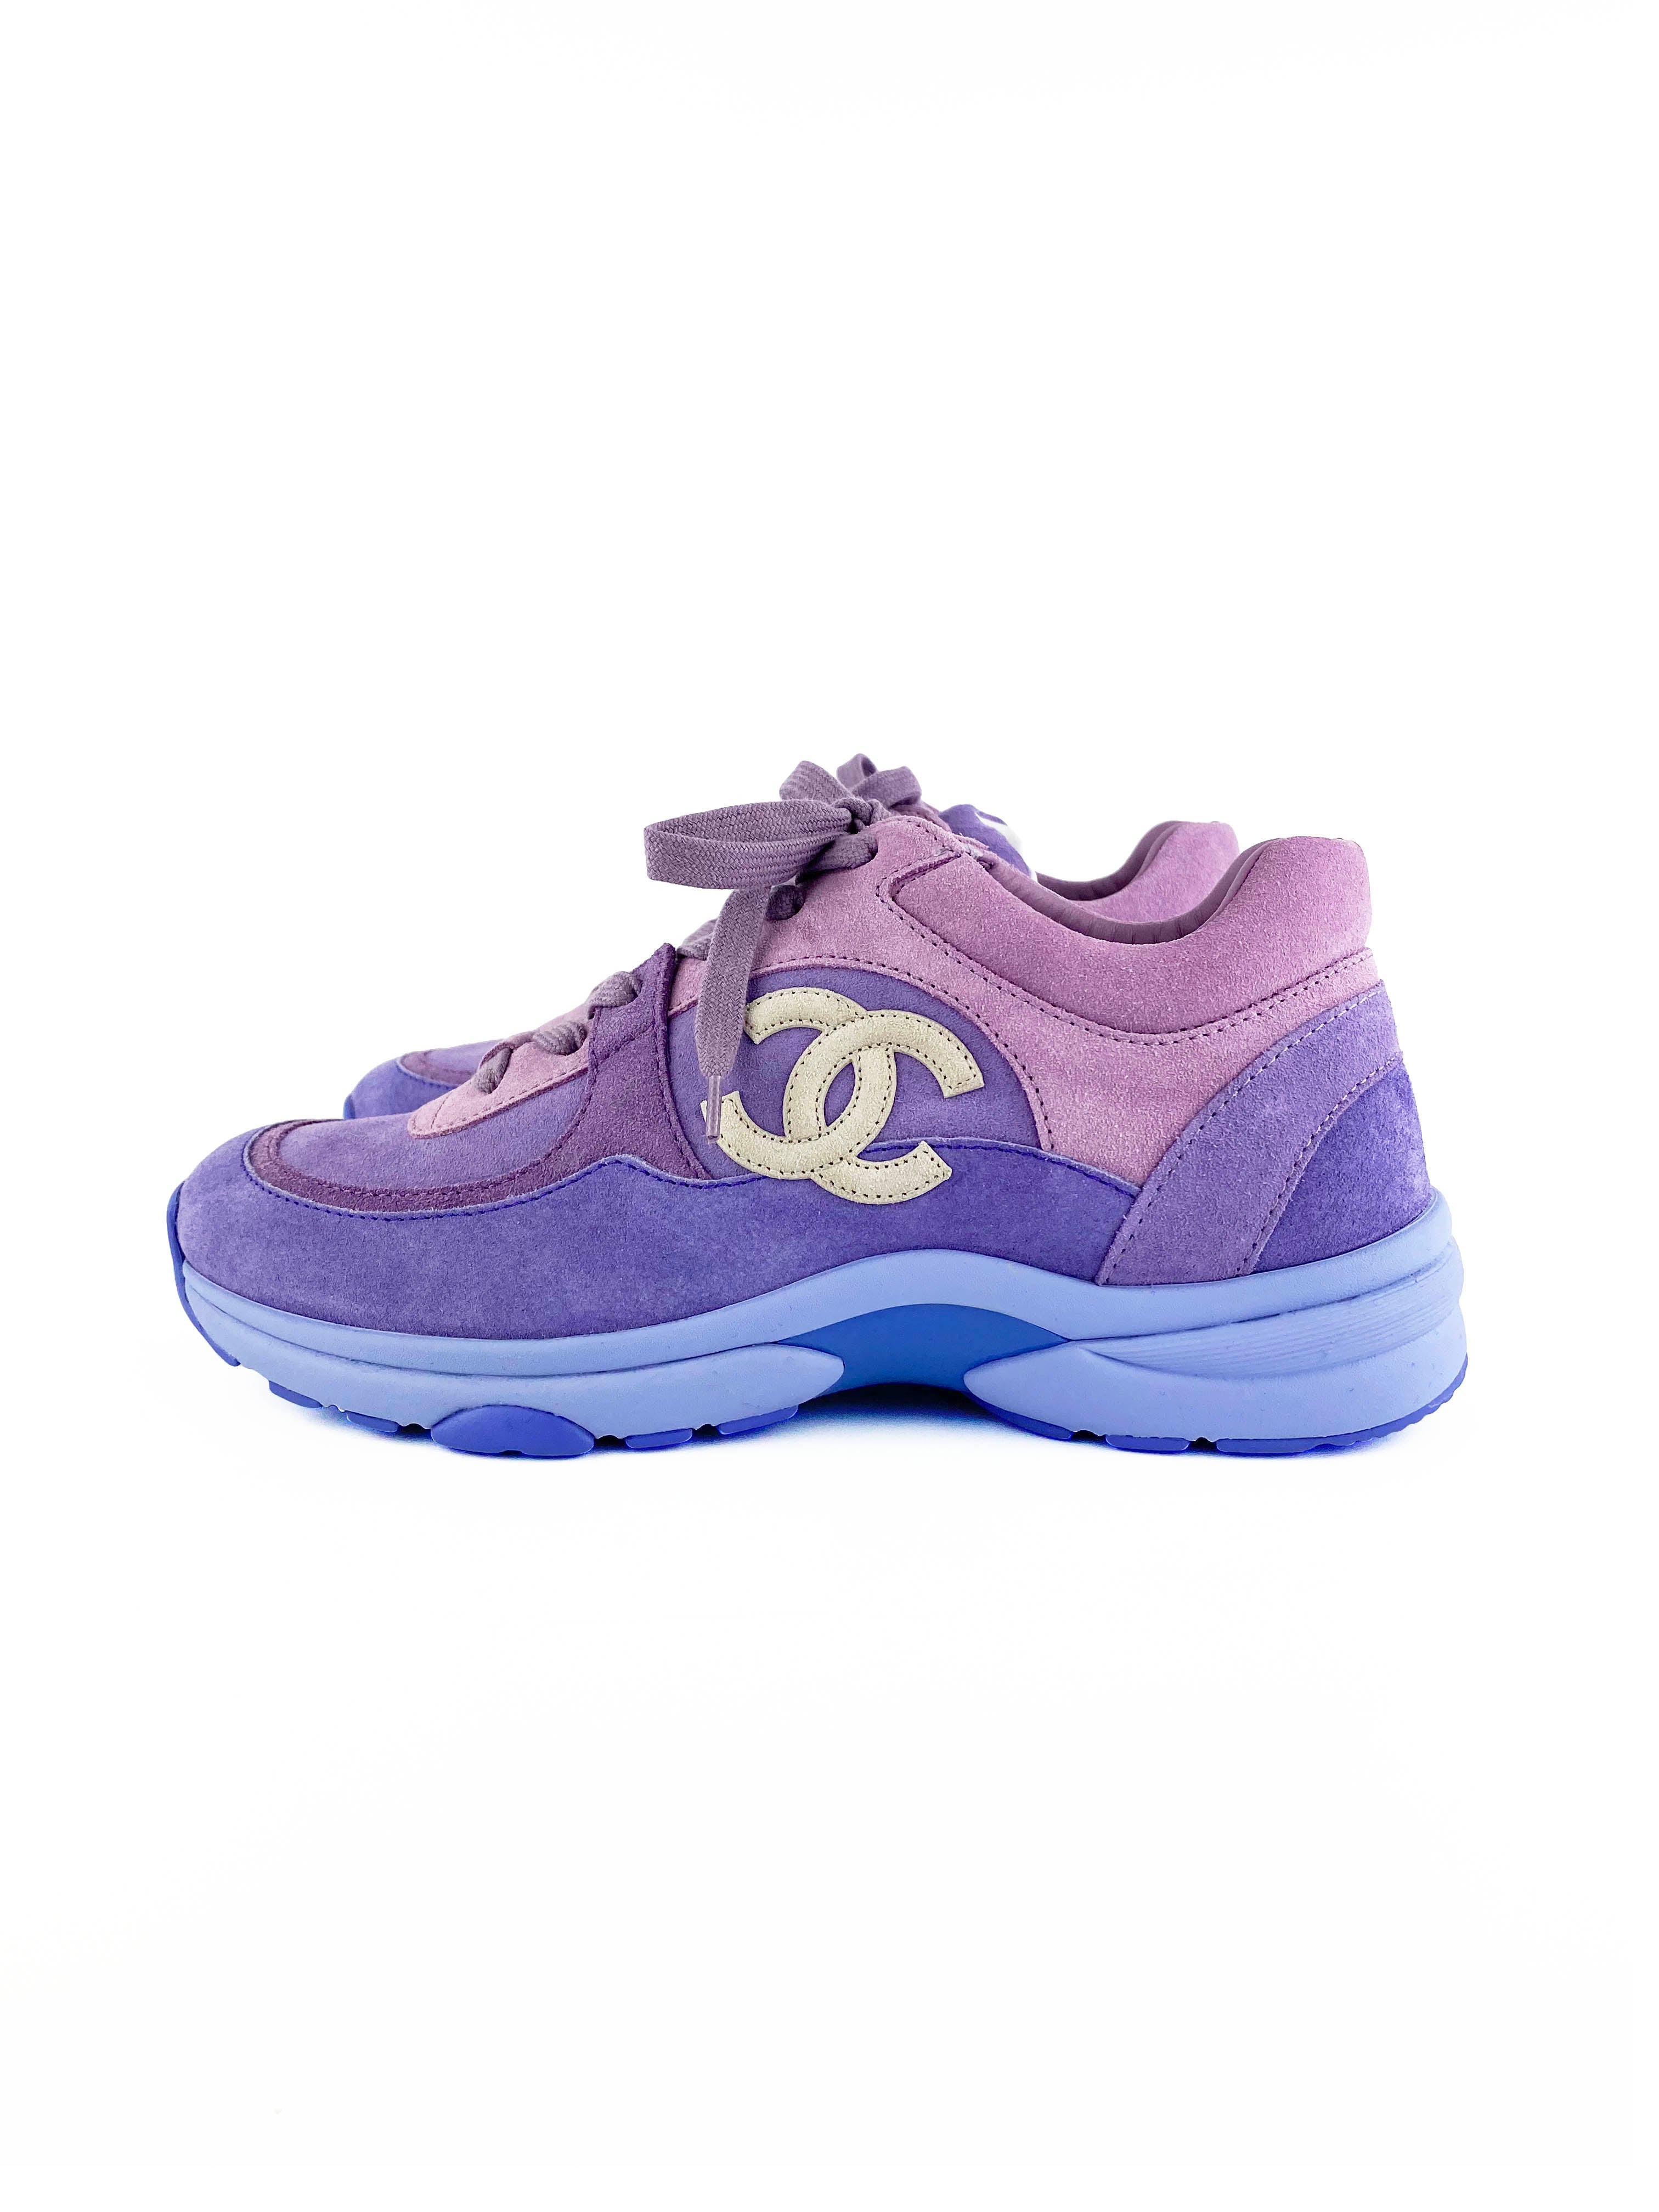 chanel-purple-suede-sneakers-2.jpg